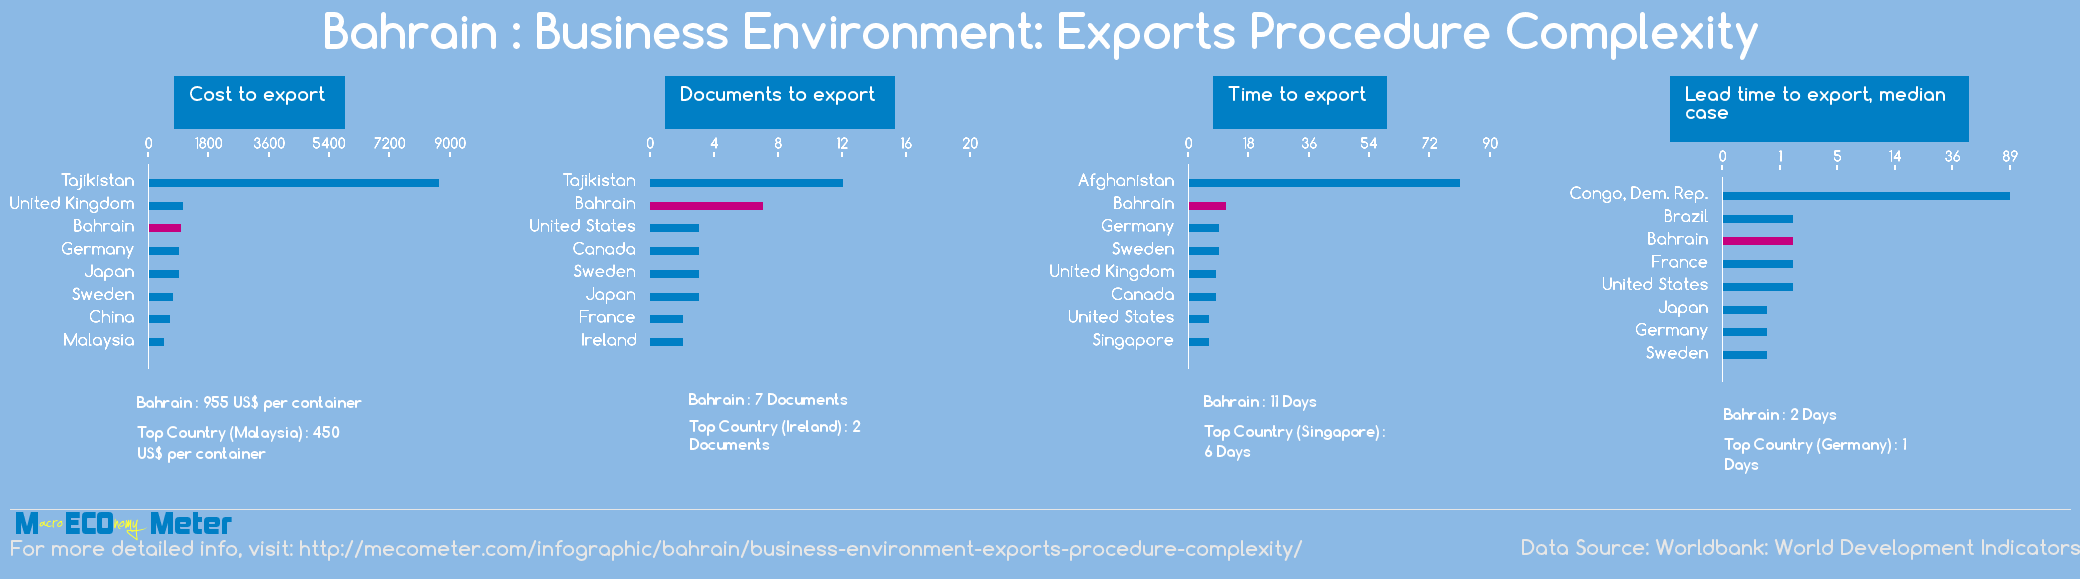 Bahrain : Business Environment: Exports Procedure Complexity